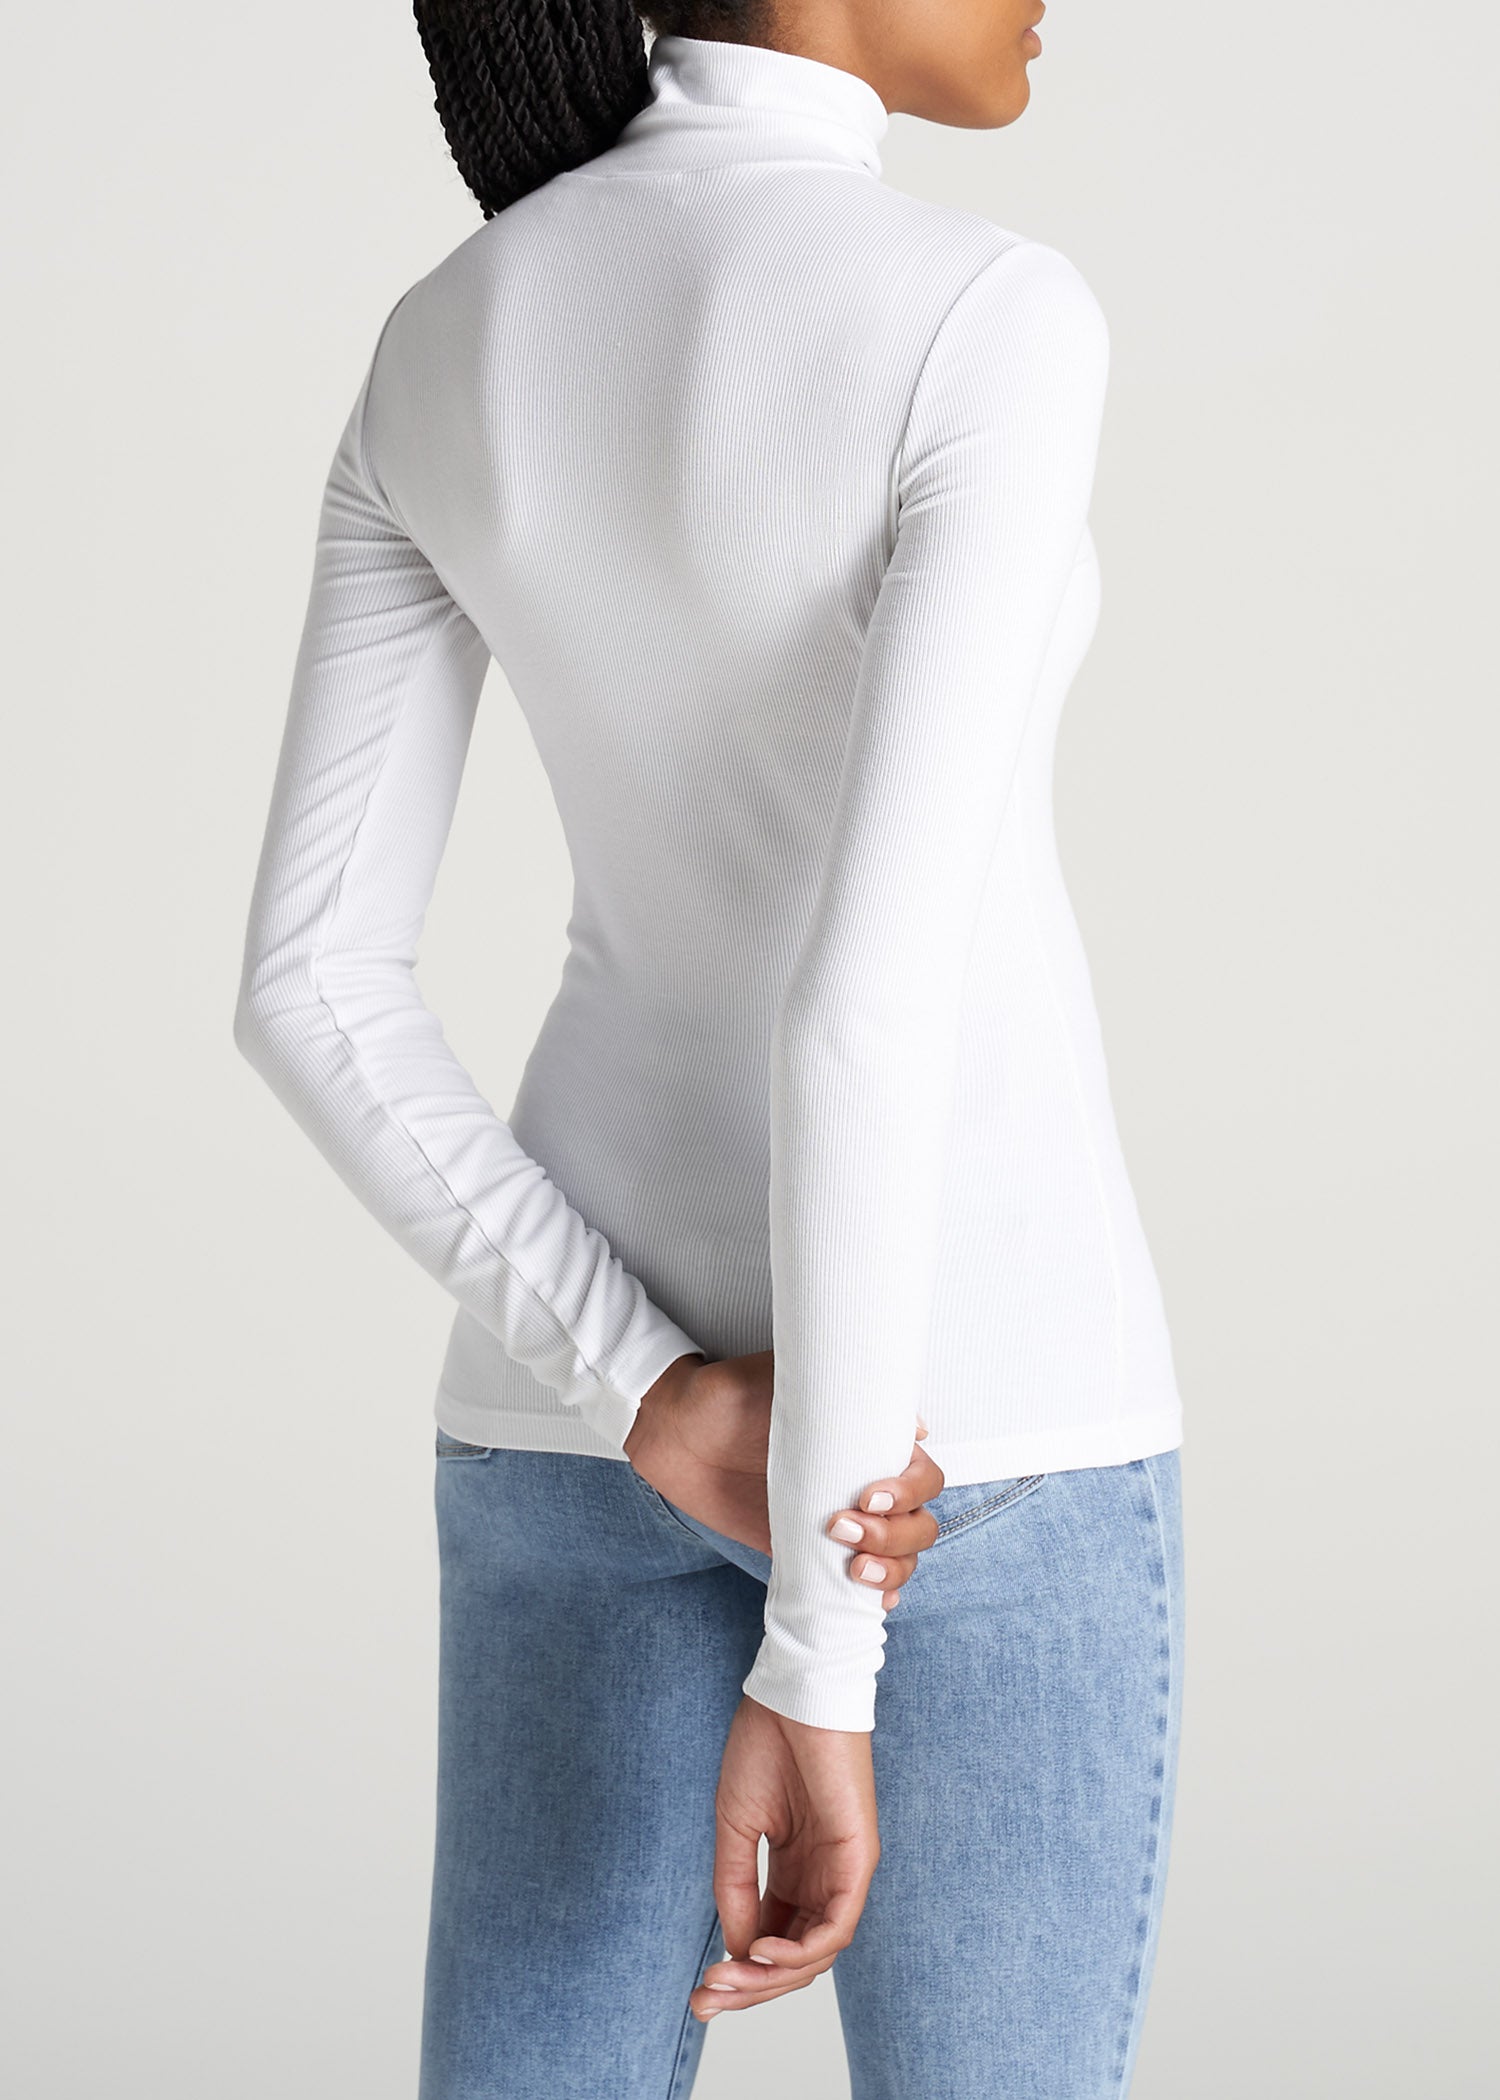 Women's Basic Turtleneck Long Sleeve Top Shirts Layering Top